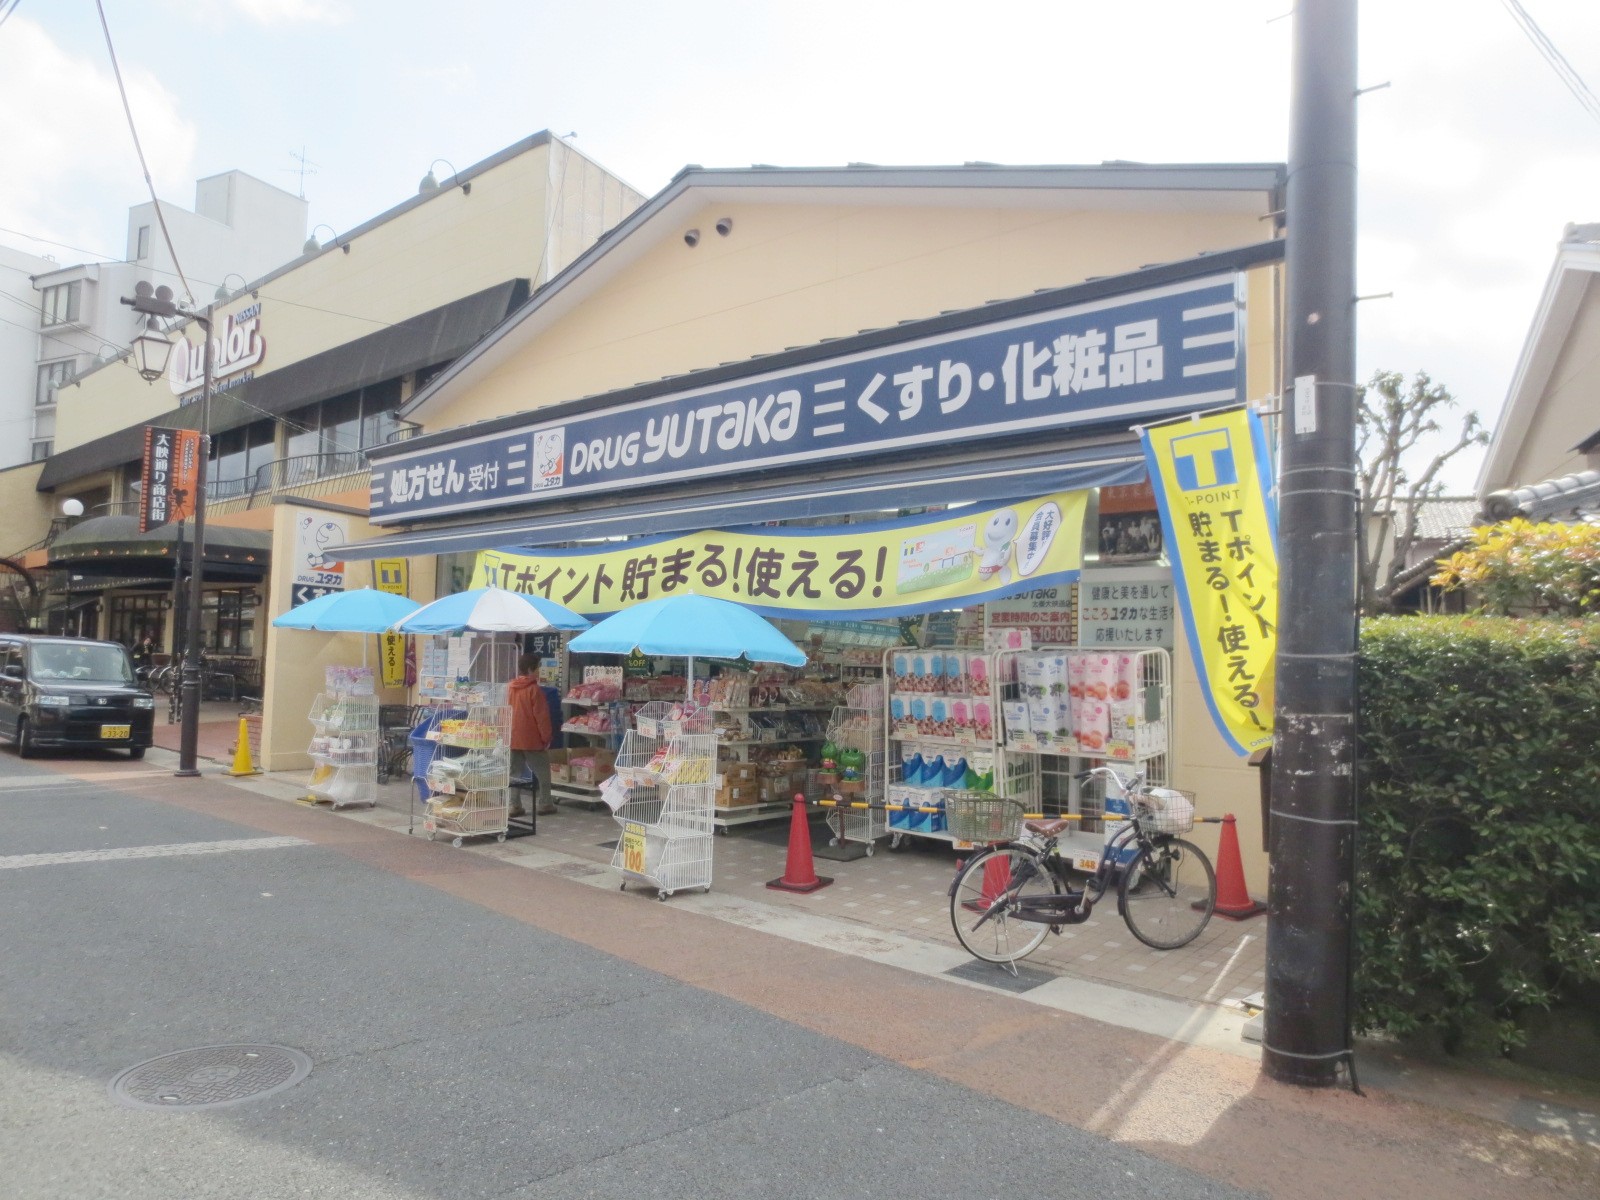 Dorakkusutoa. Drag Yutaka Uzumasa Daiei through shop 435m until (drugstore)